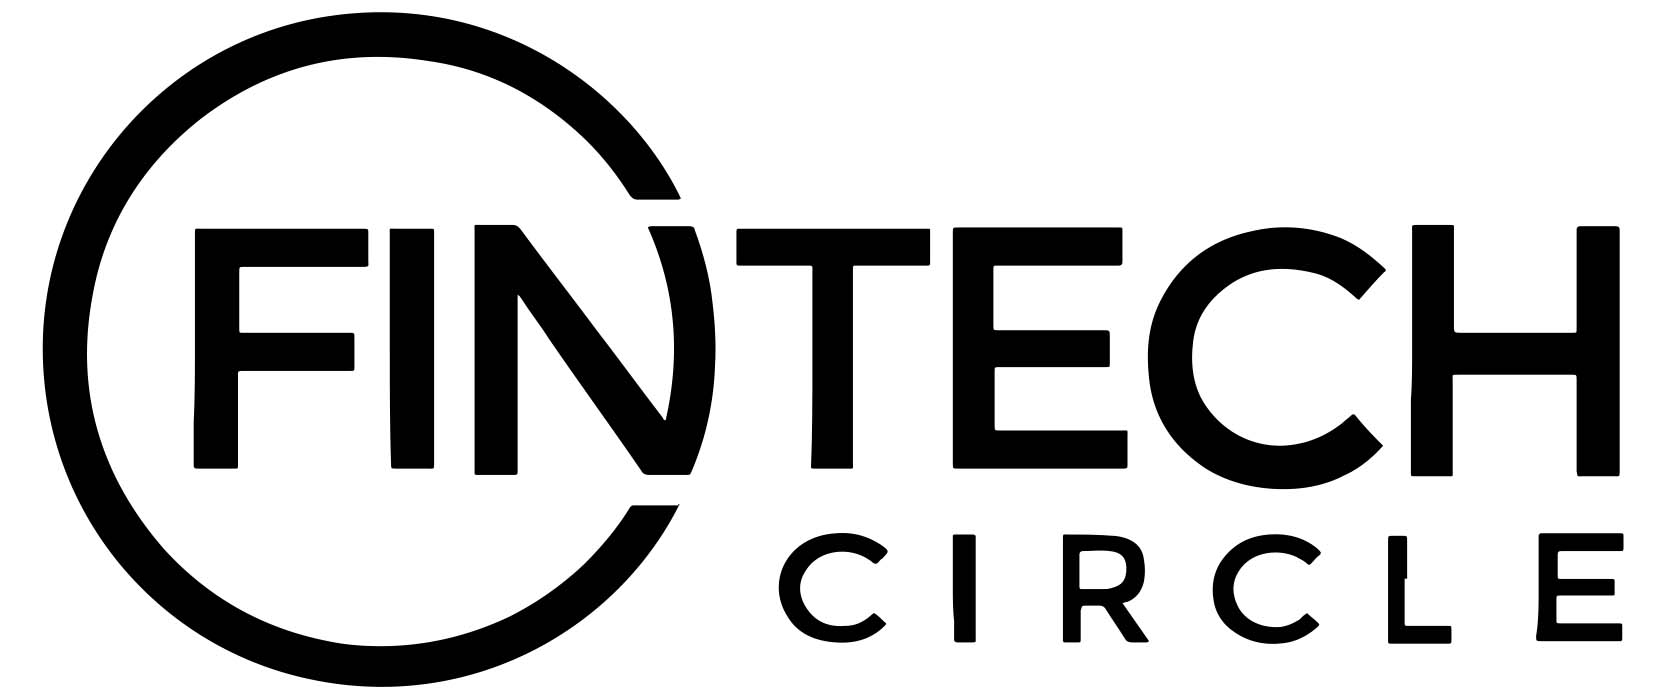 Fintech Circle logo